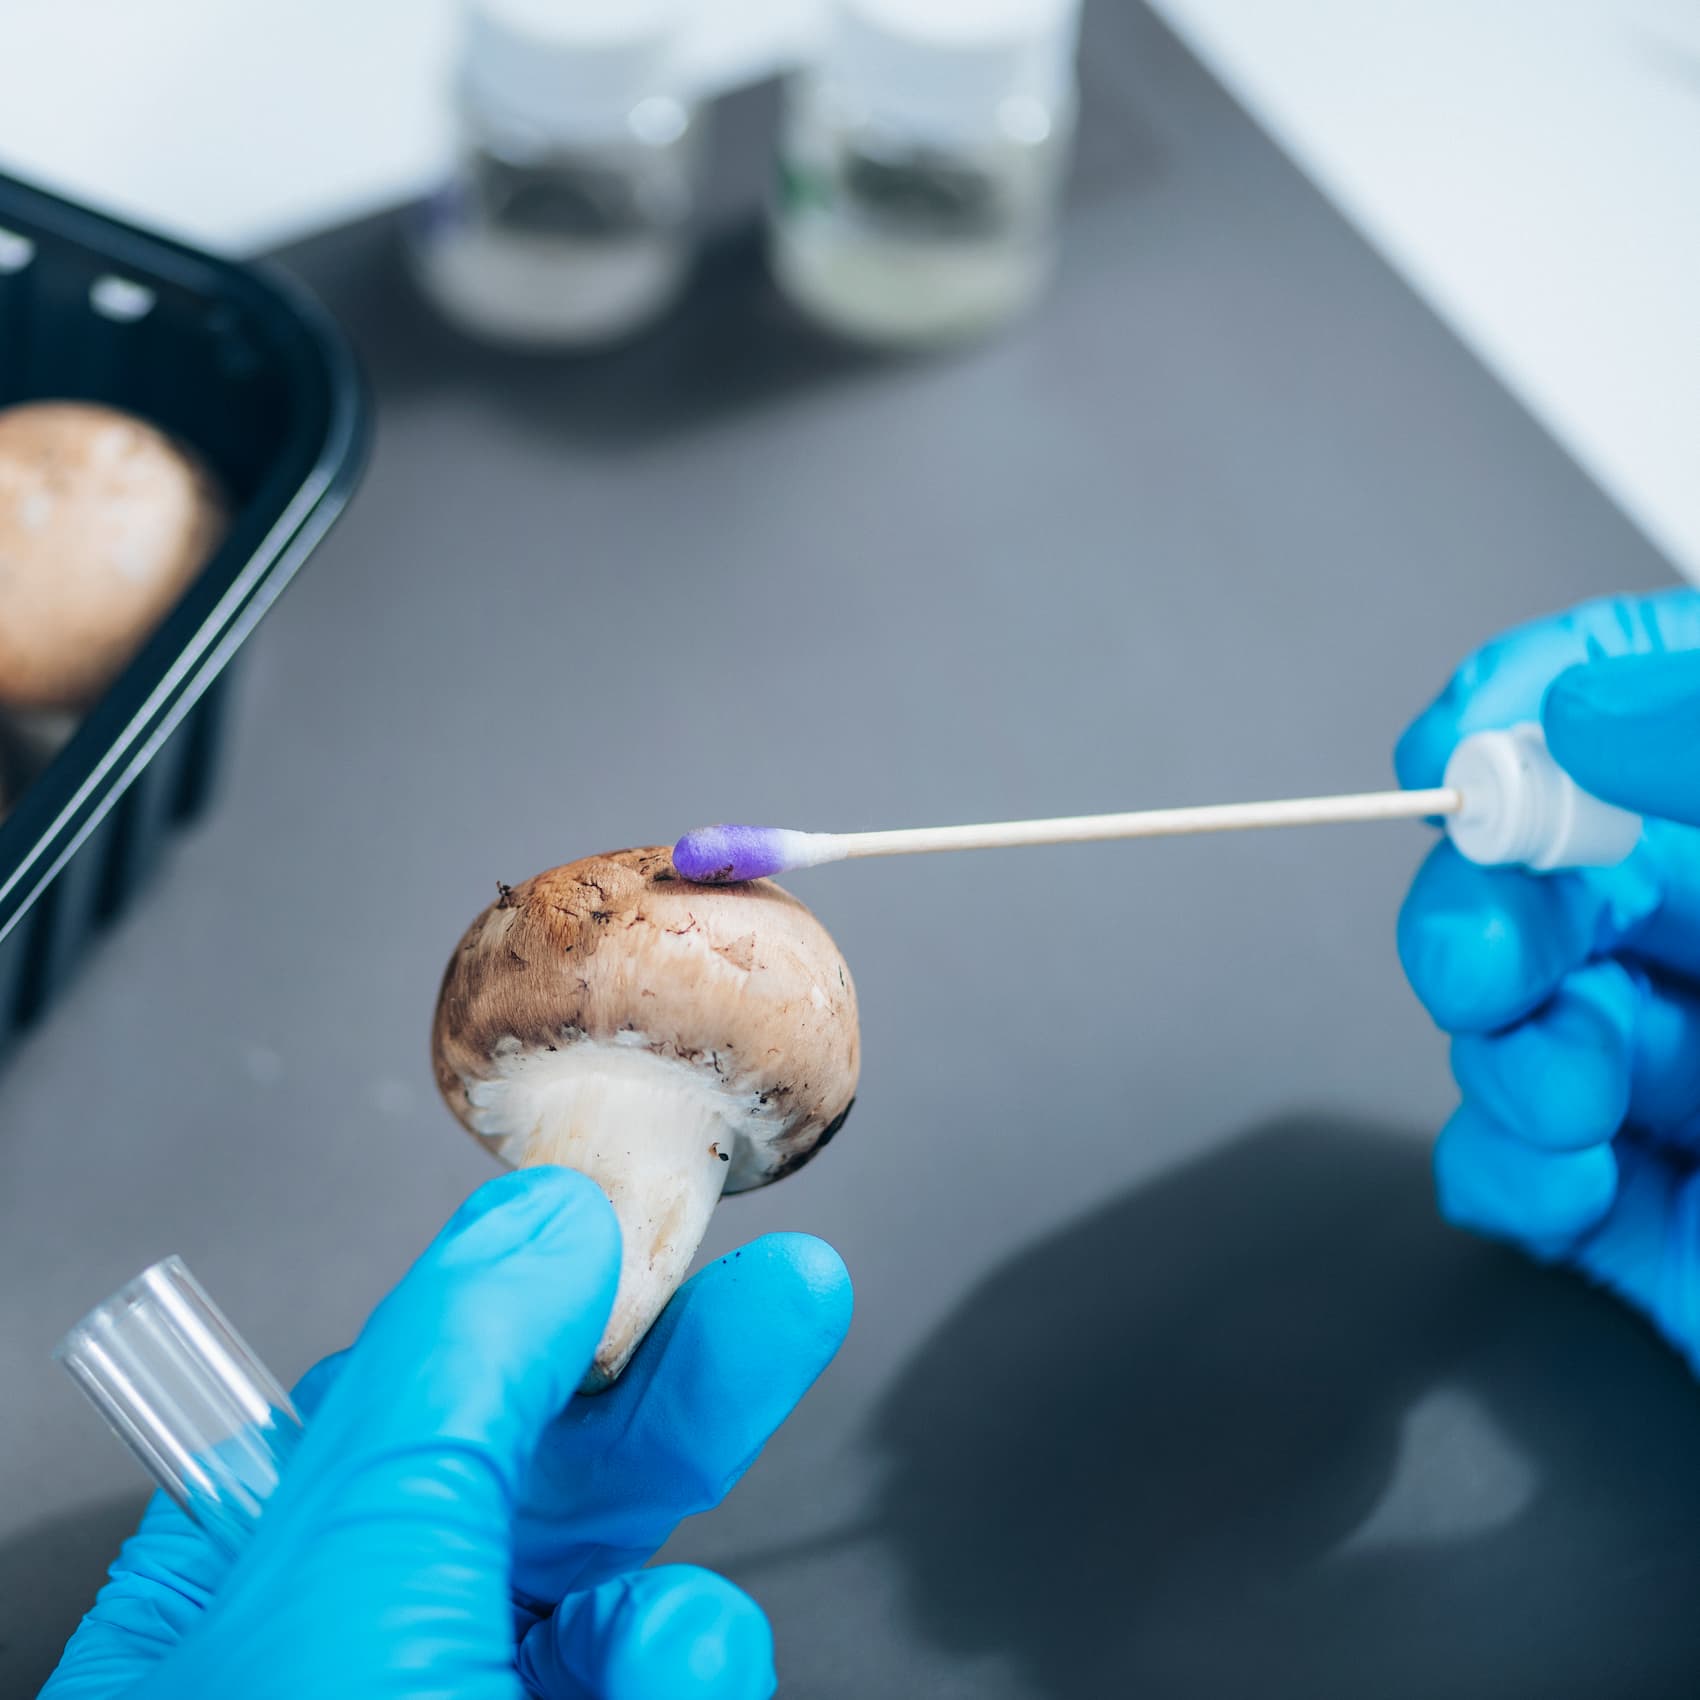 food-safety-pesticide-analysis-of-mushrooms-in-lab-FURCBSG